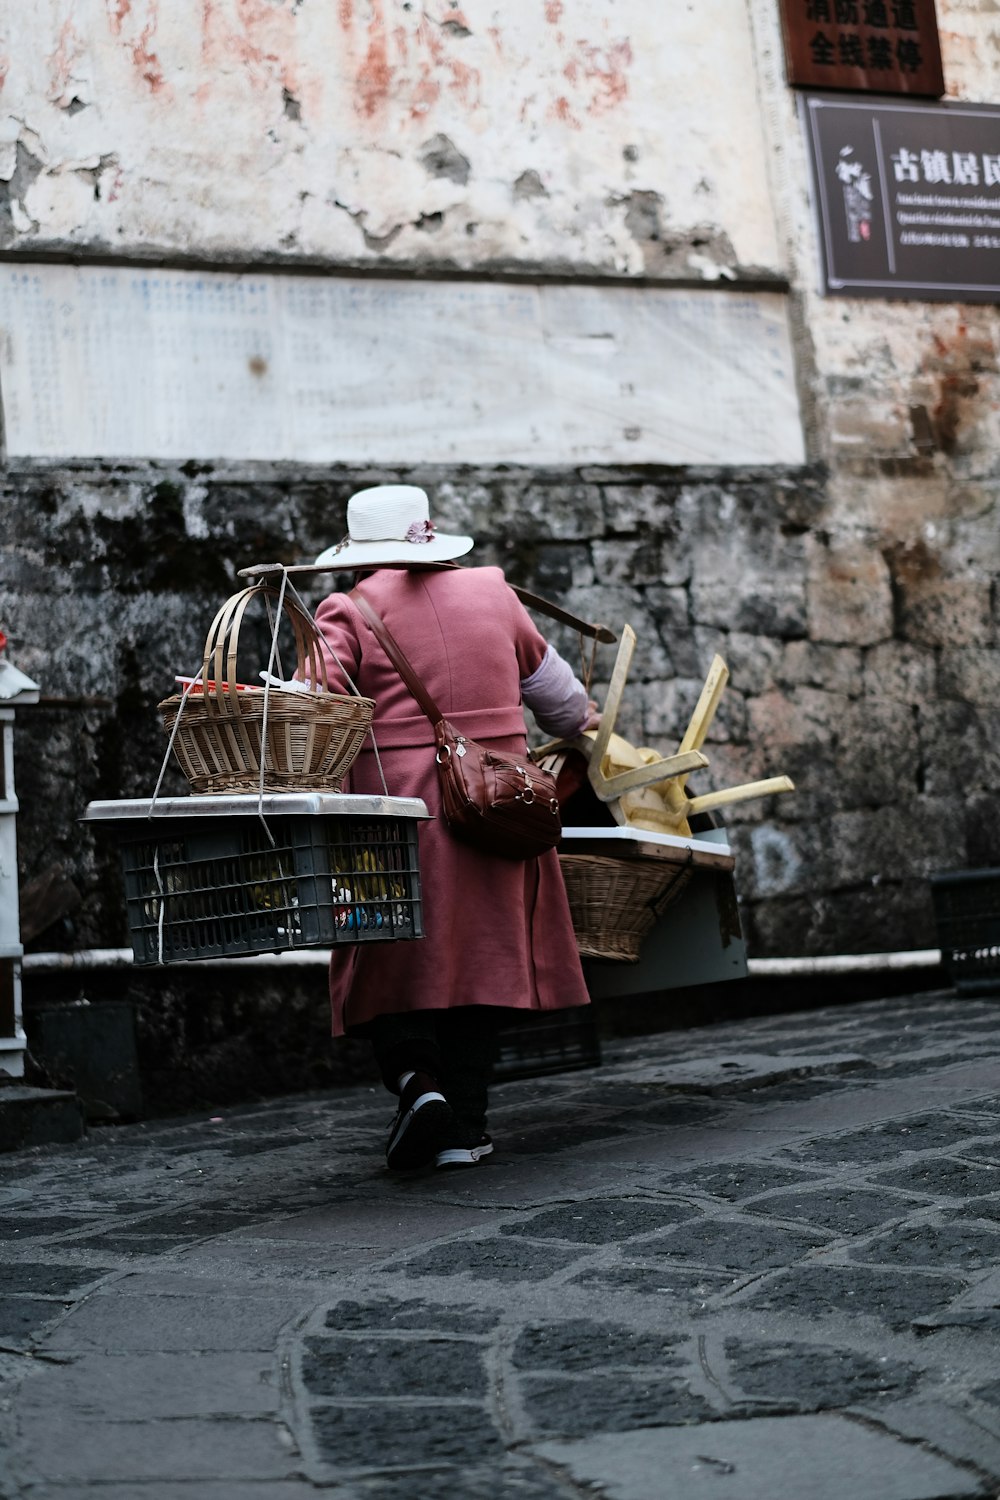 a woman walking down a street carrying a basket